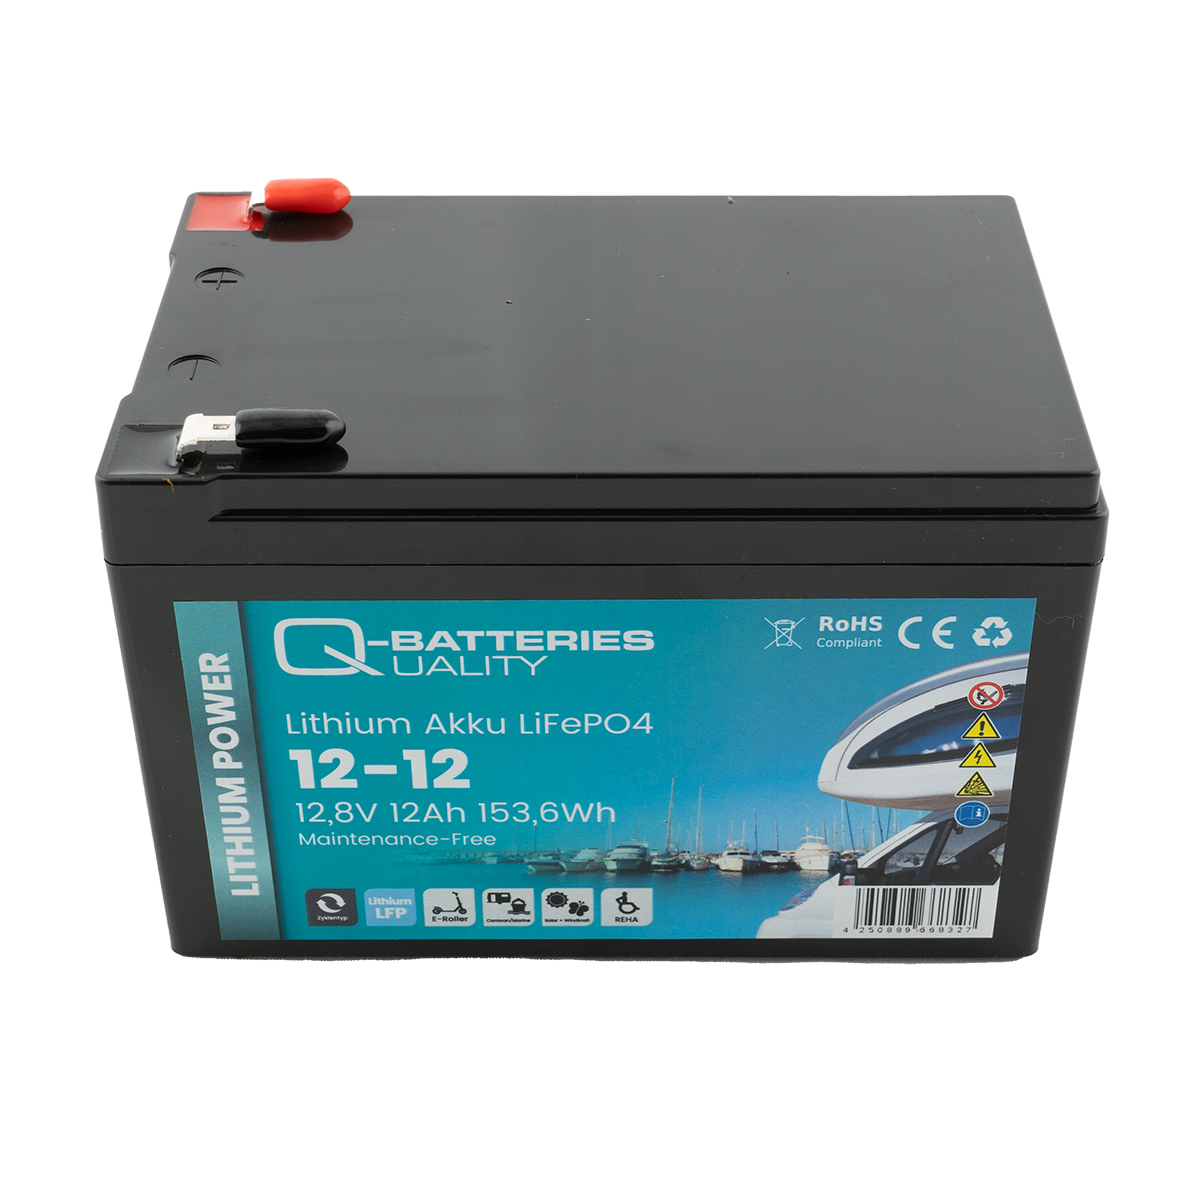 Q-Batteries Lithium Wohnmobilbatterie 12-12 12,8V 12Ah 153,6Wh LiFePO4 Akku